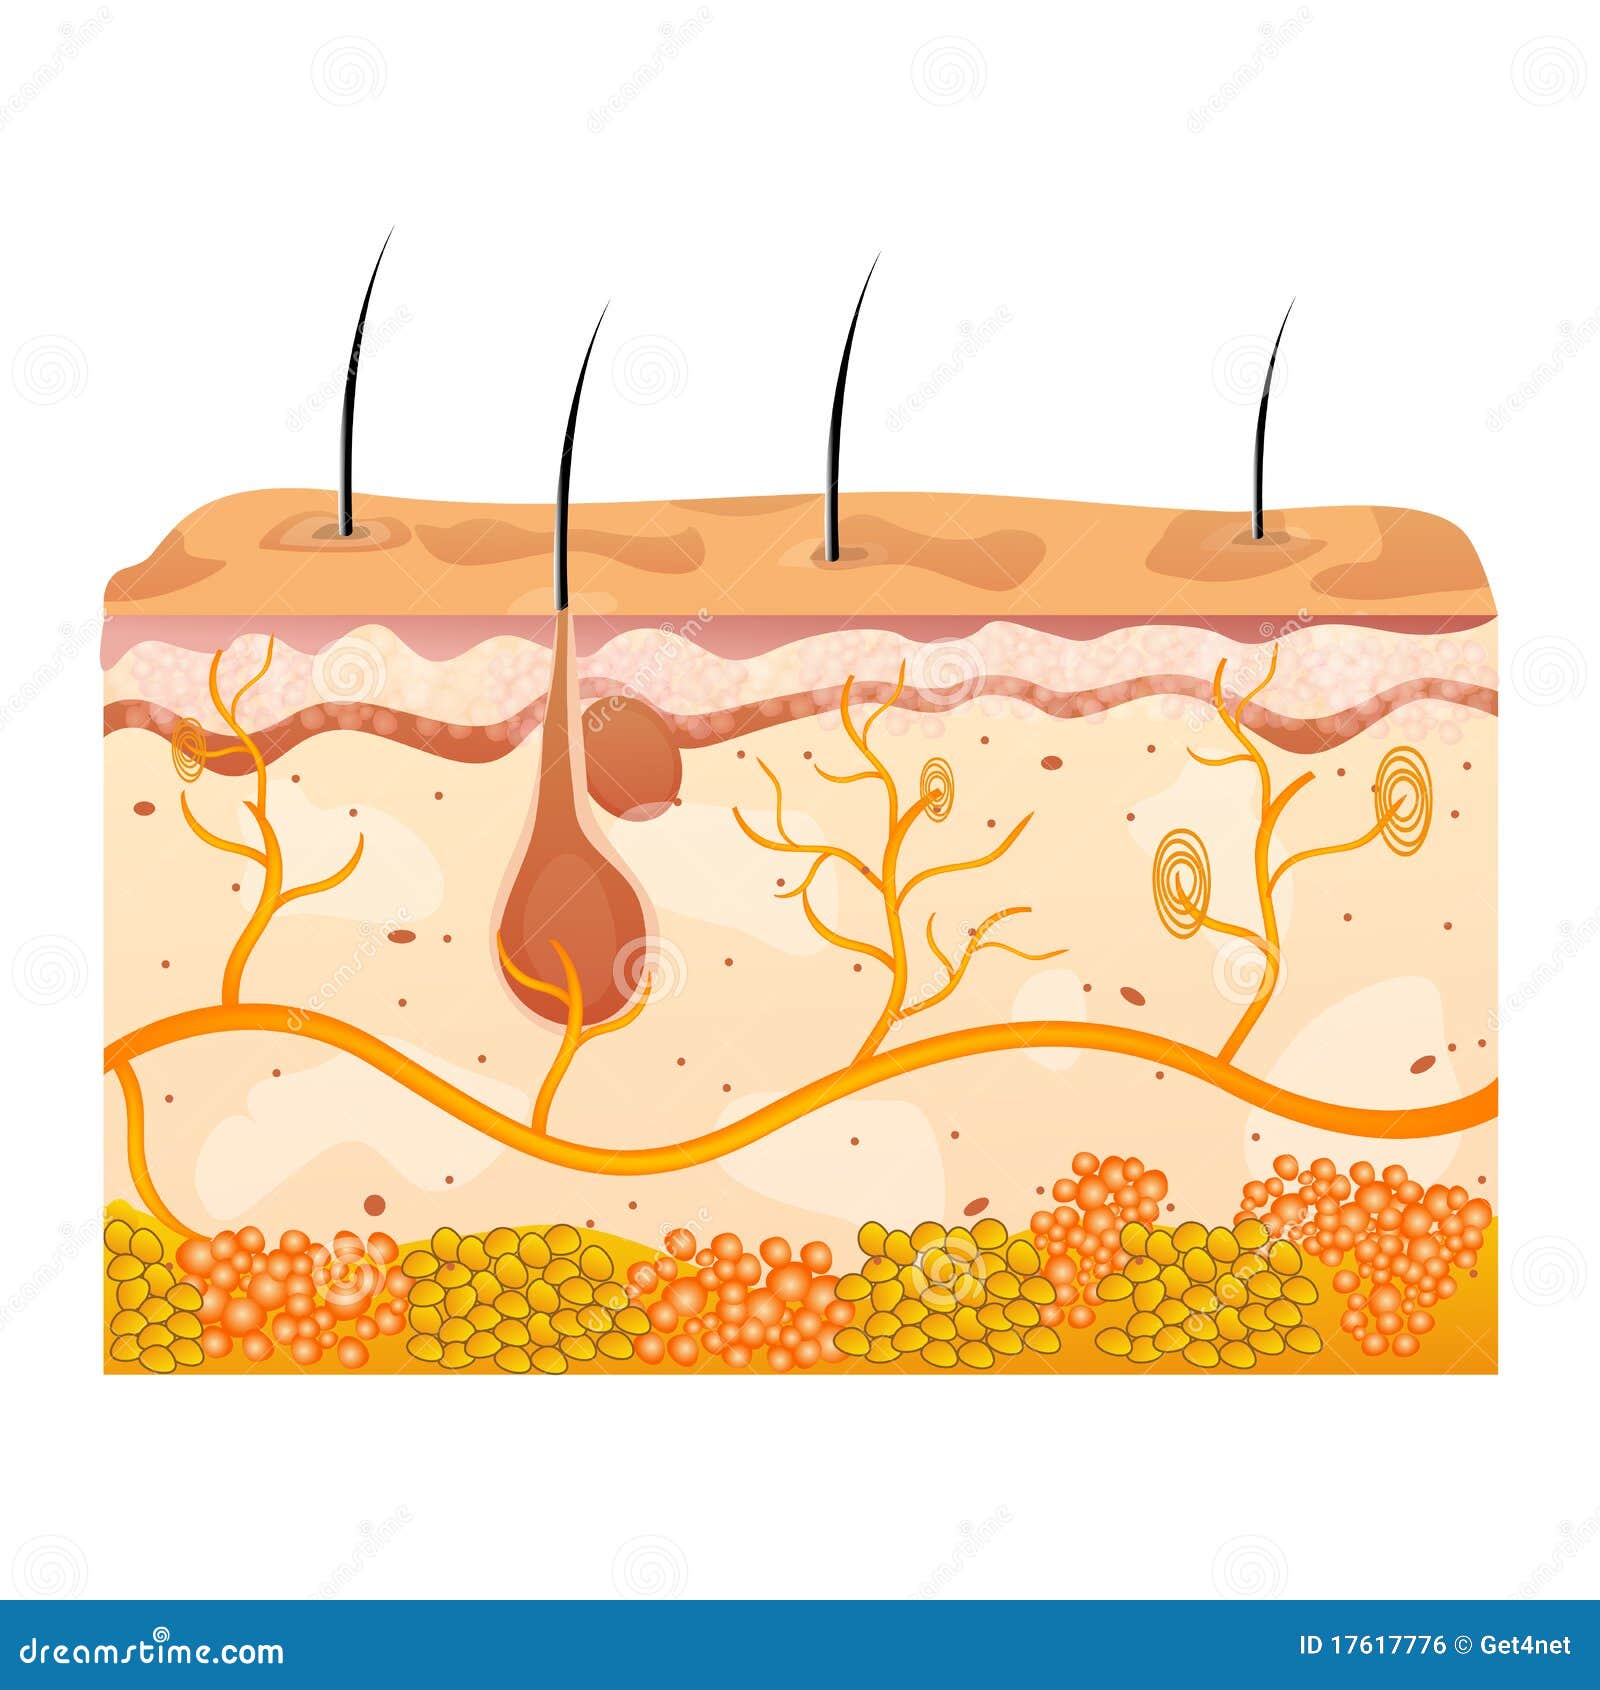 skin cells